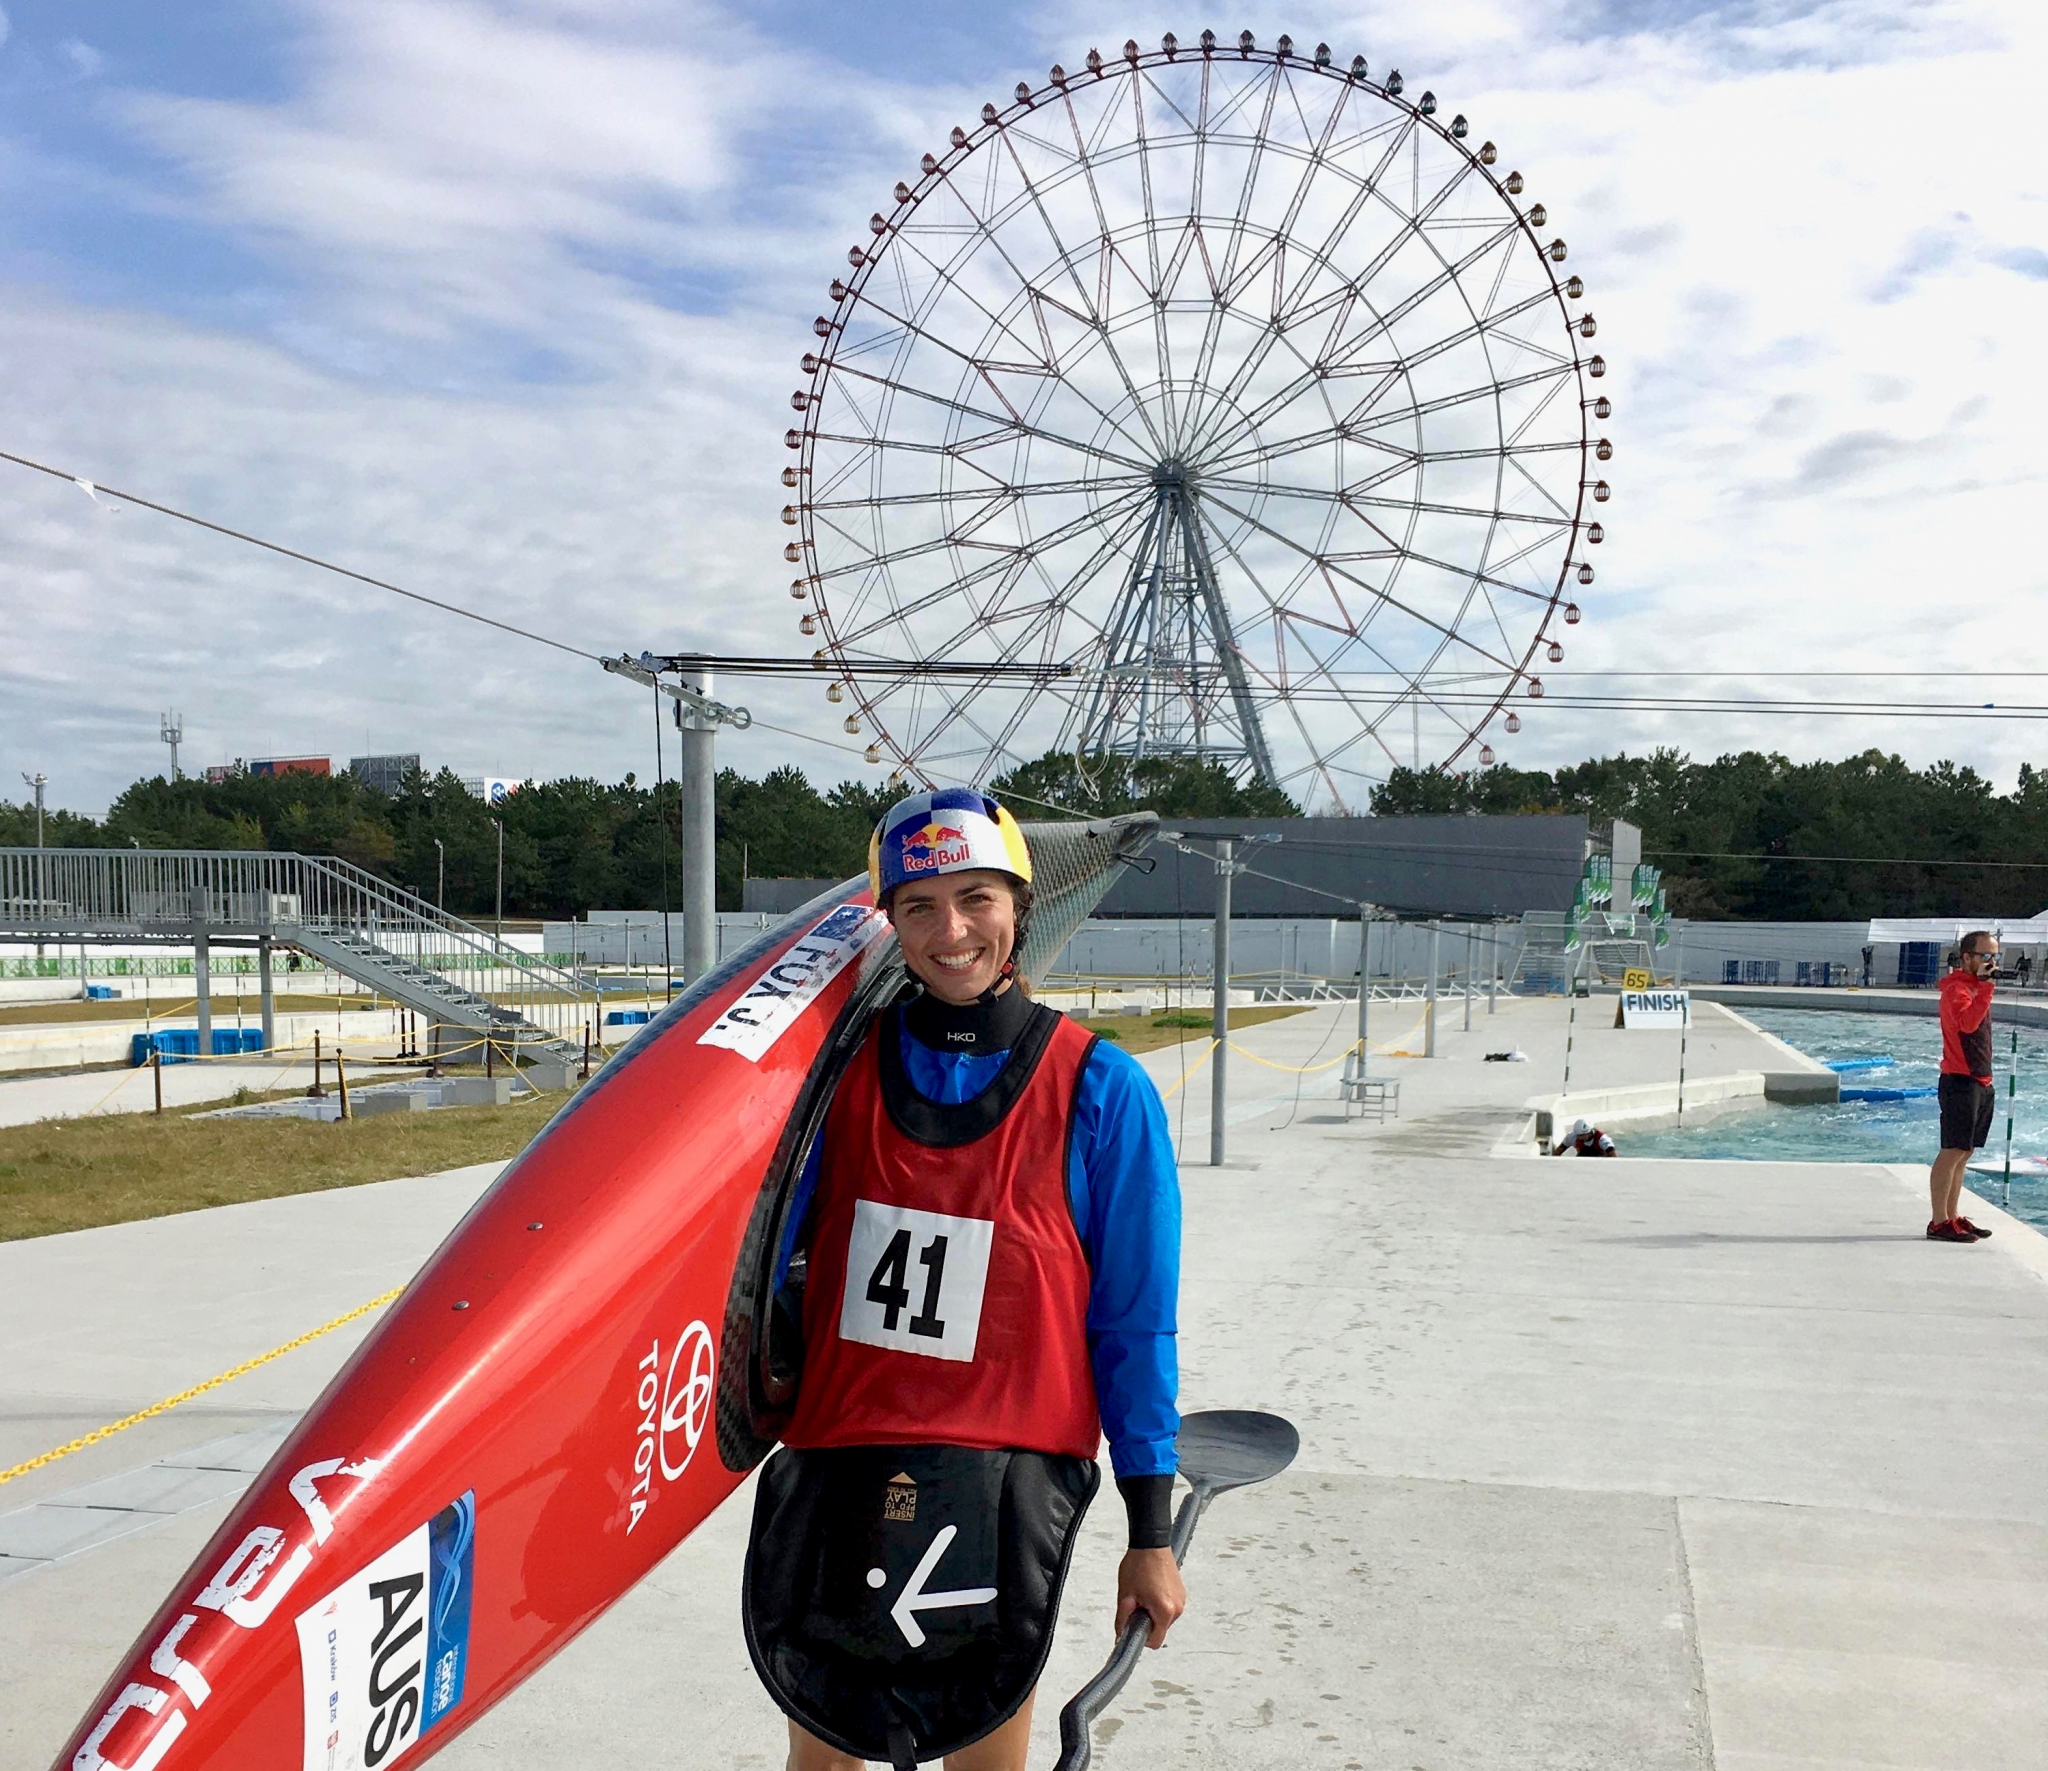 Kasai Canoe Slalom Centre praised after Tokyo 2020 test event